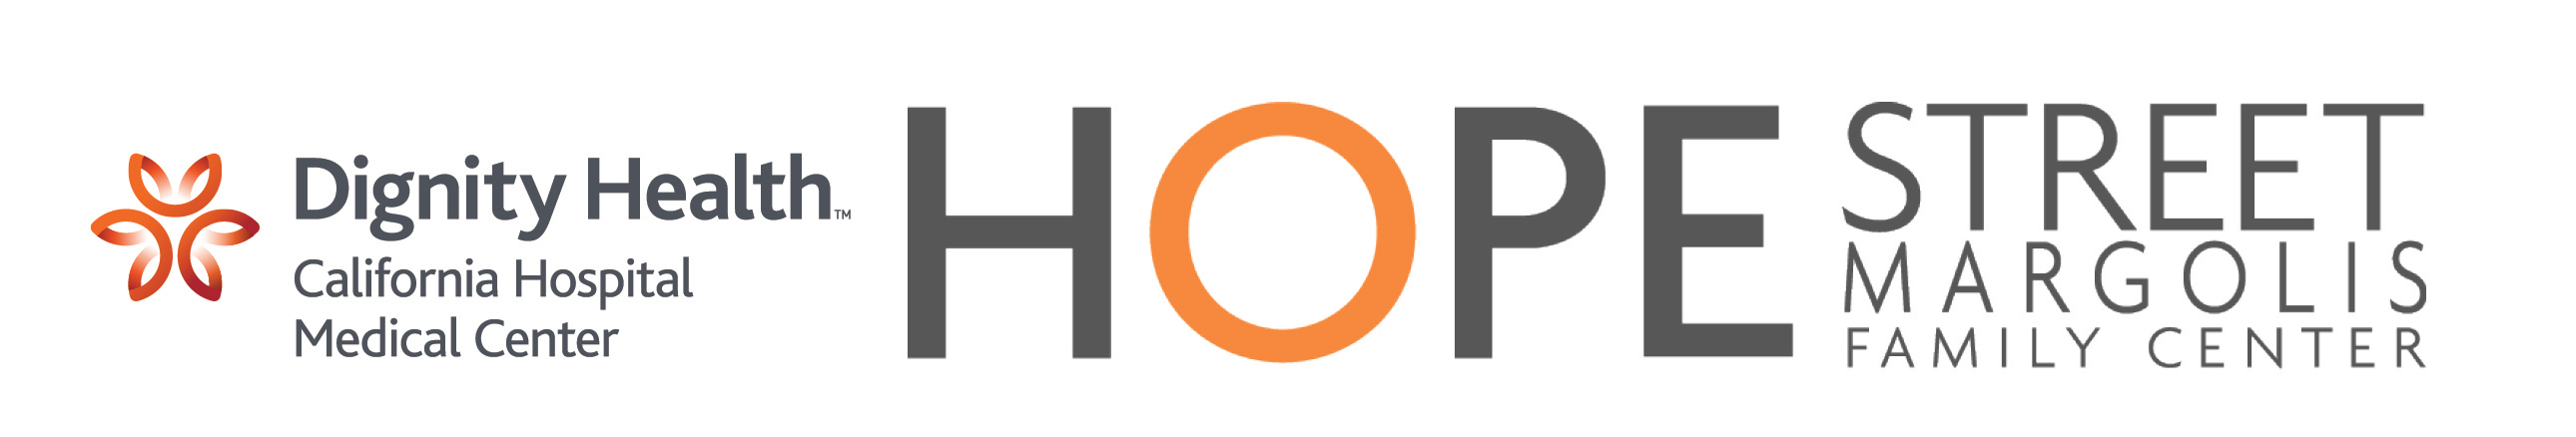 Hope street logo